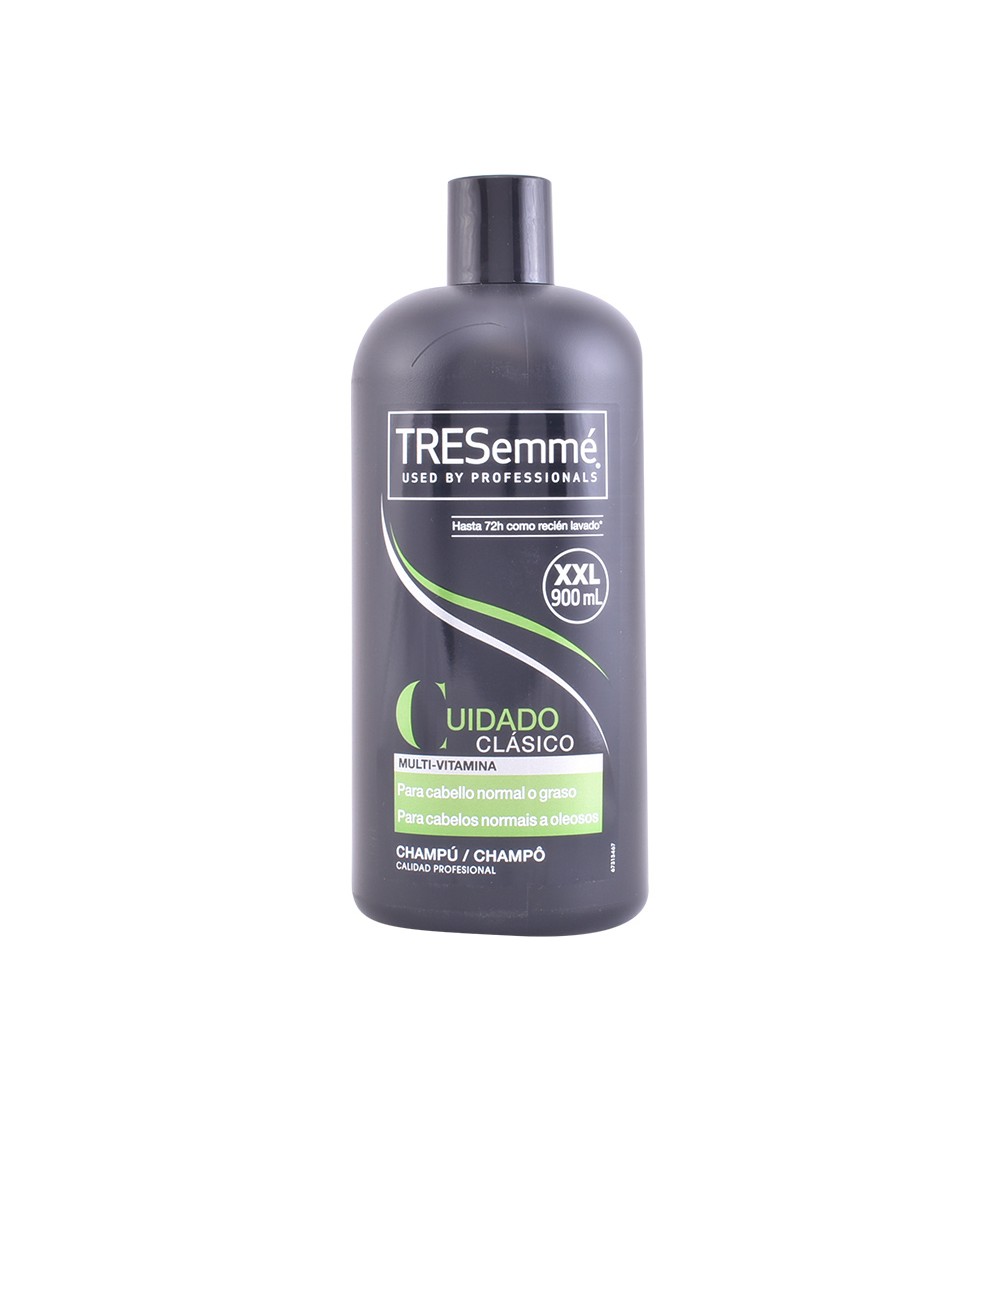 CUIDADO CLASSIC shampooing 900 ml